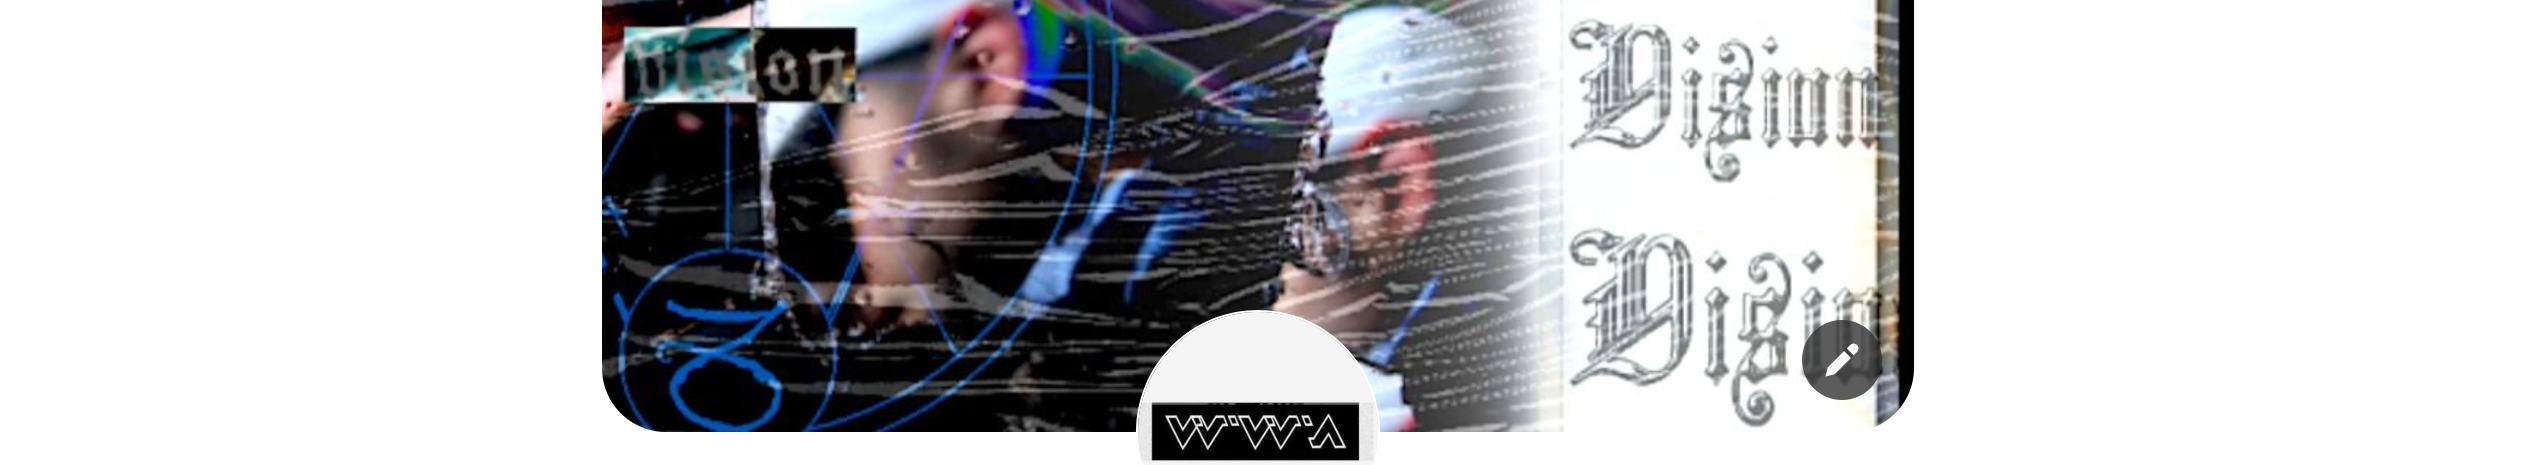 WWA whitewolfart のプロファイルバナー